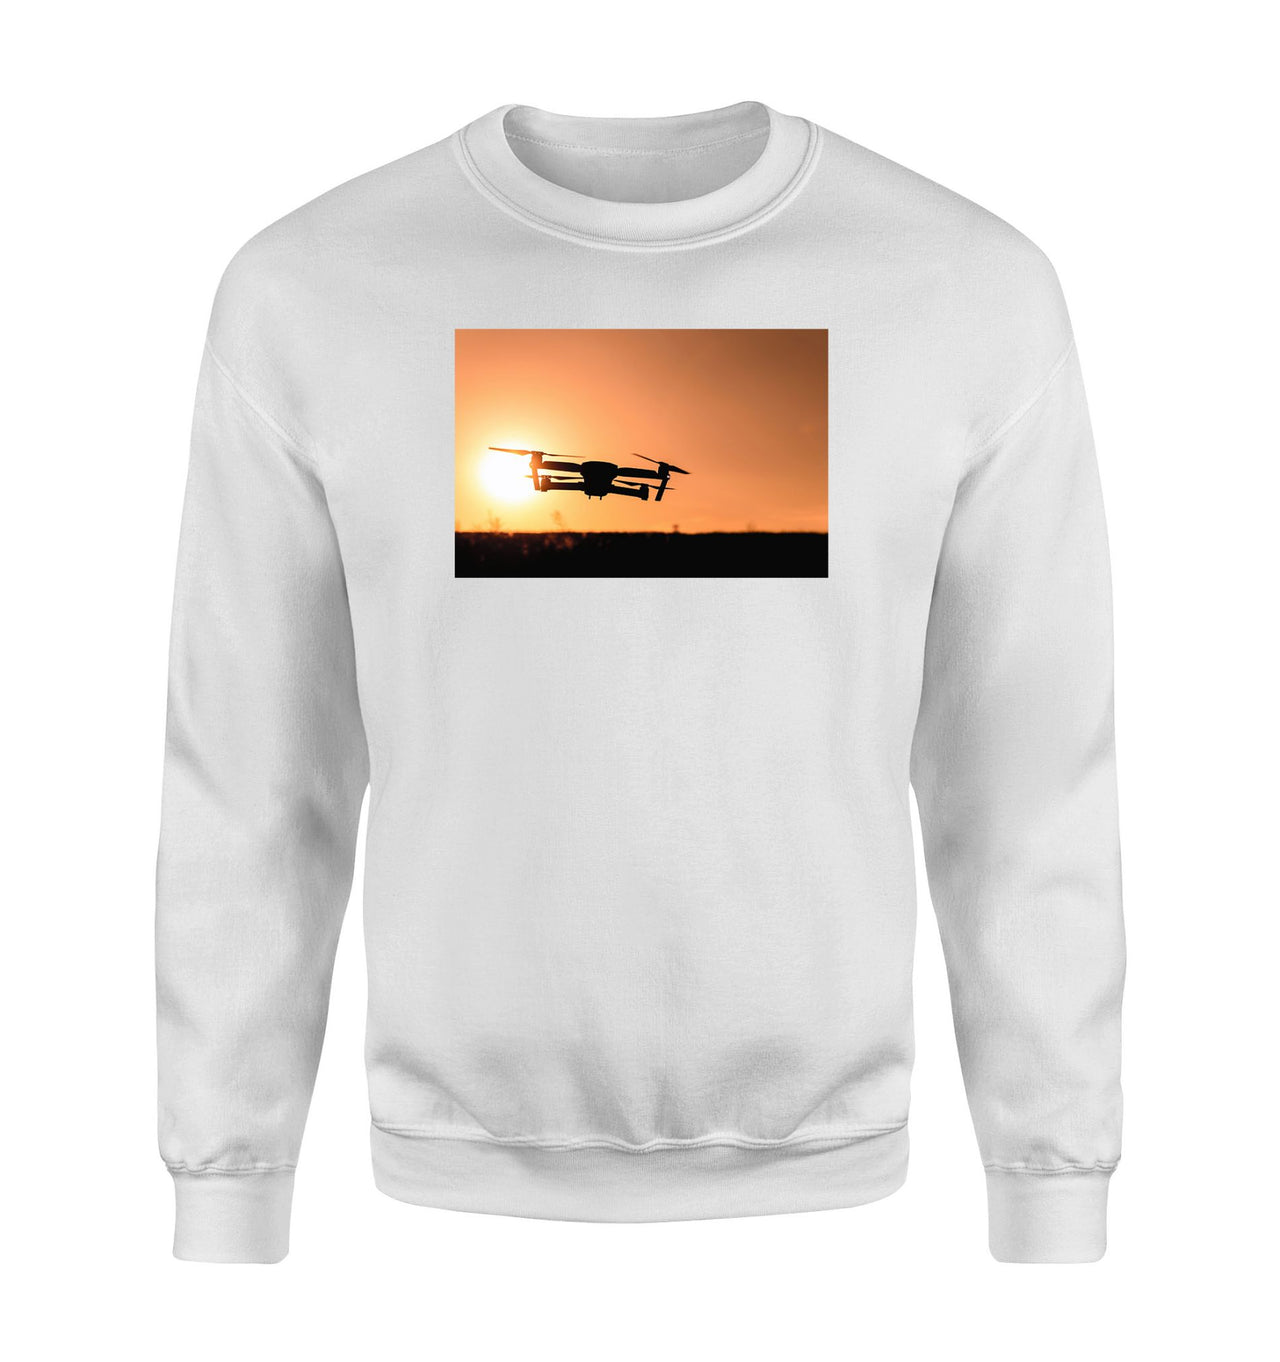 Amazing Drone in Sunset Designed Sweatshirts